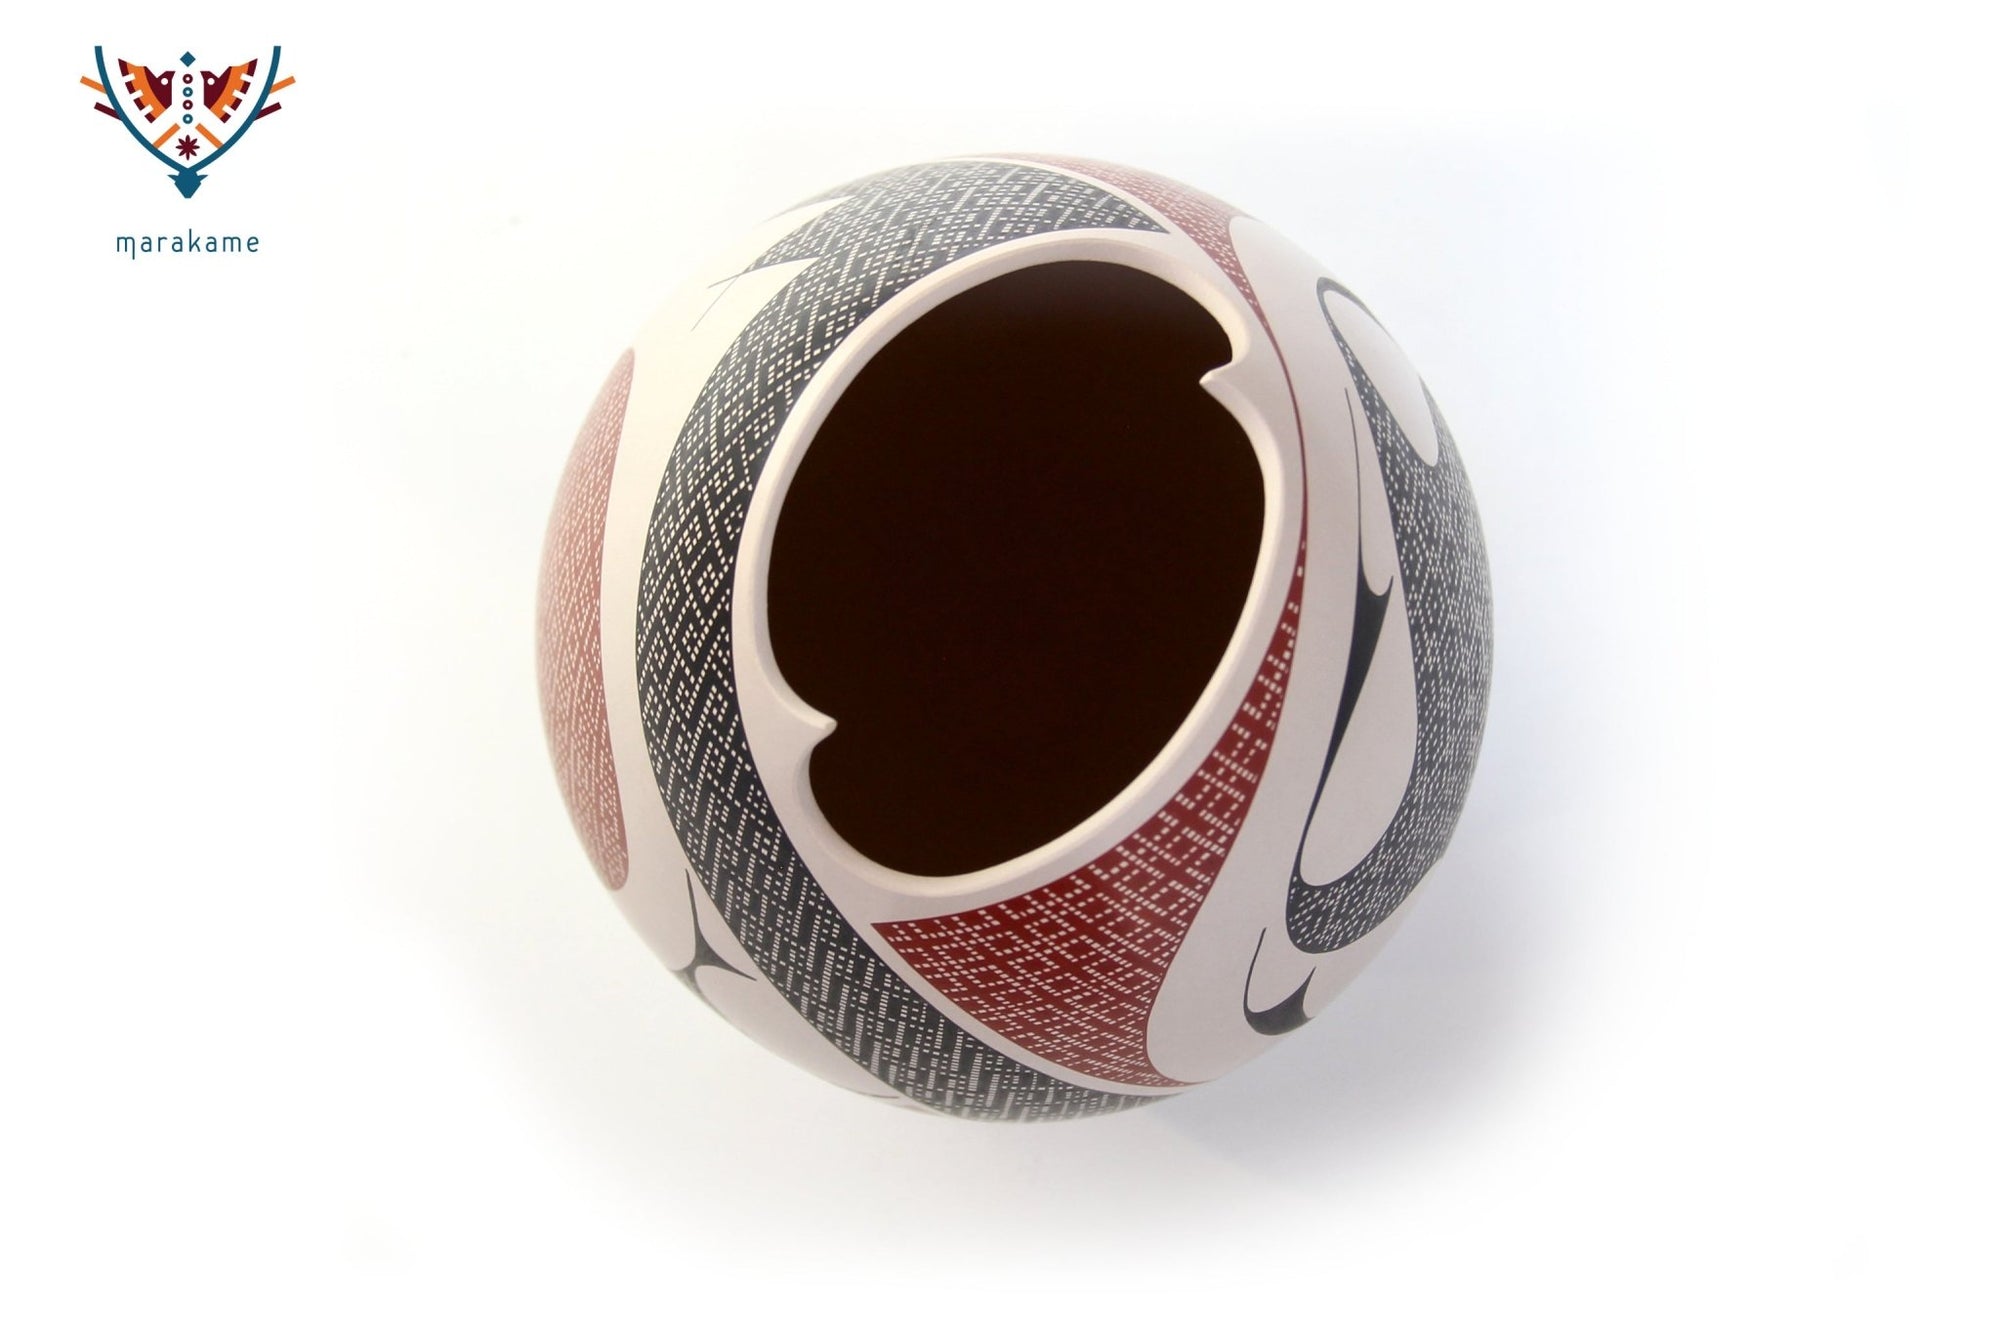 Keramik von Mata Ortiz – S/T – Elías Peña – Kleines Stück – Huichol Art – Marakame